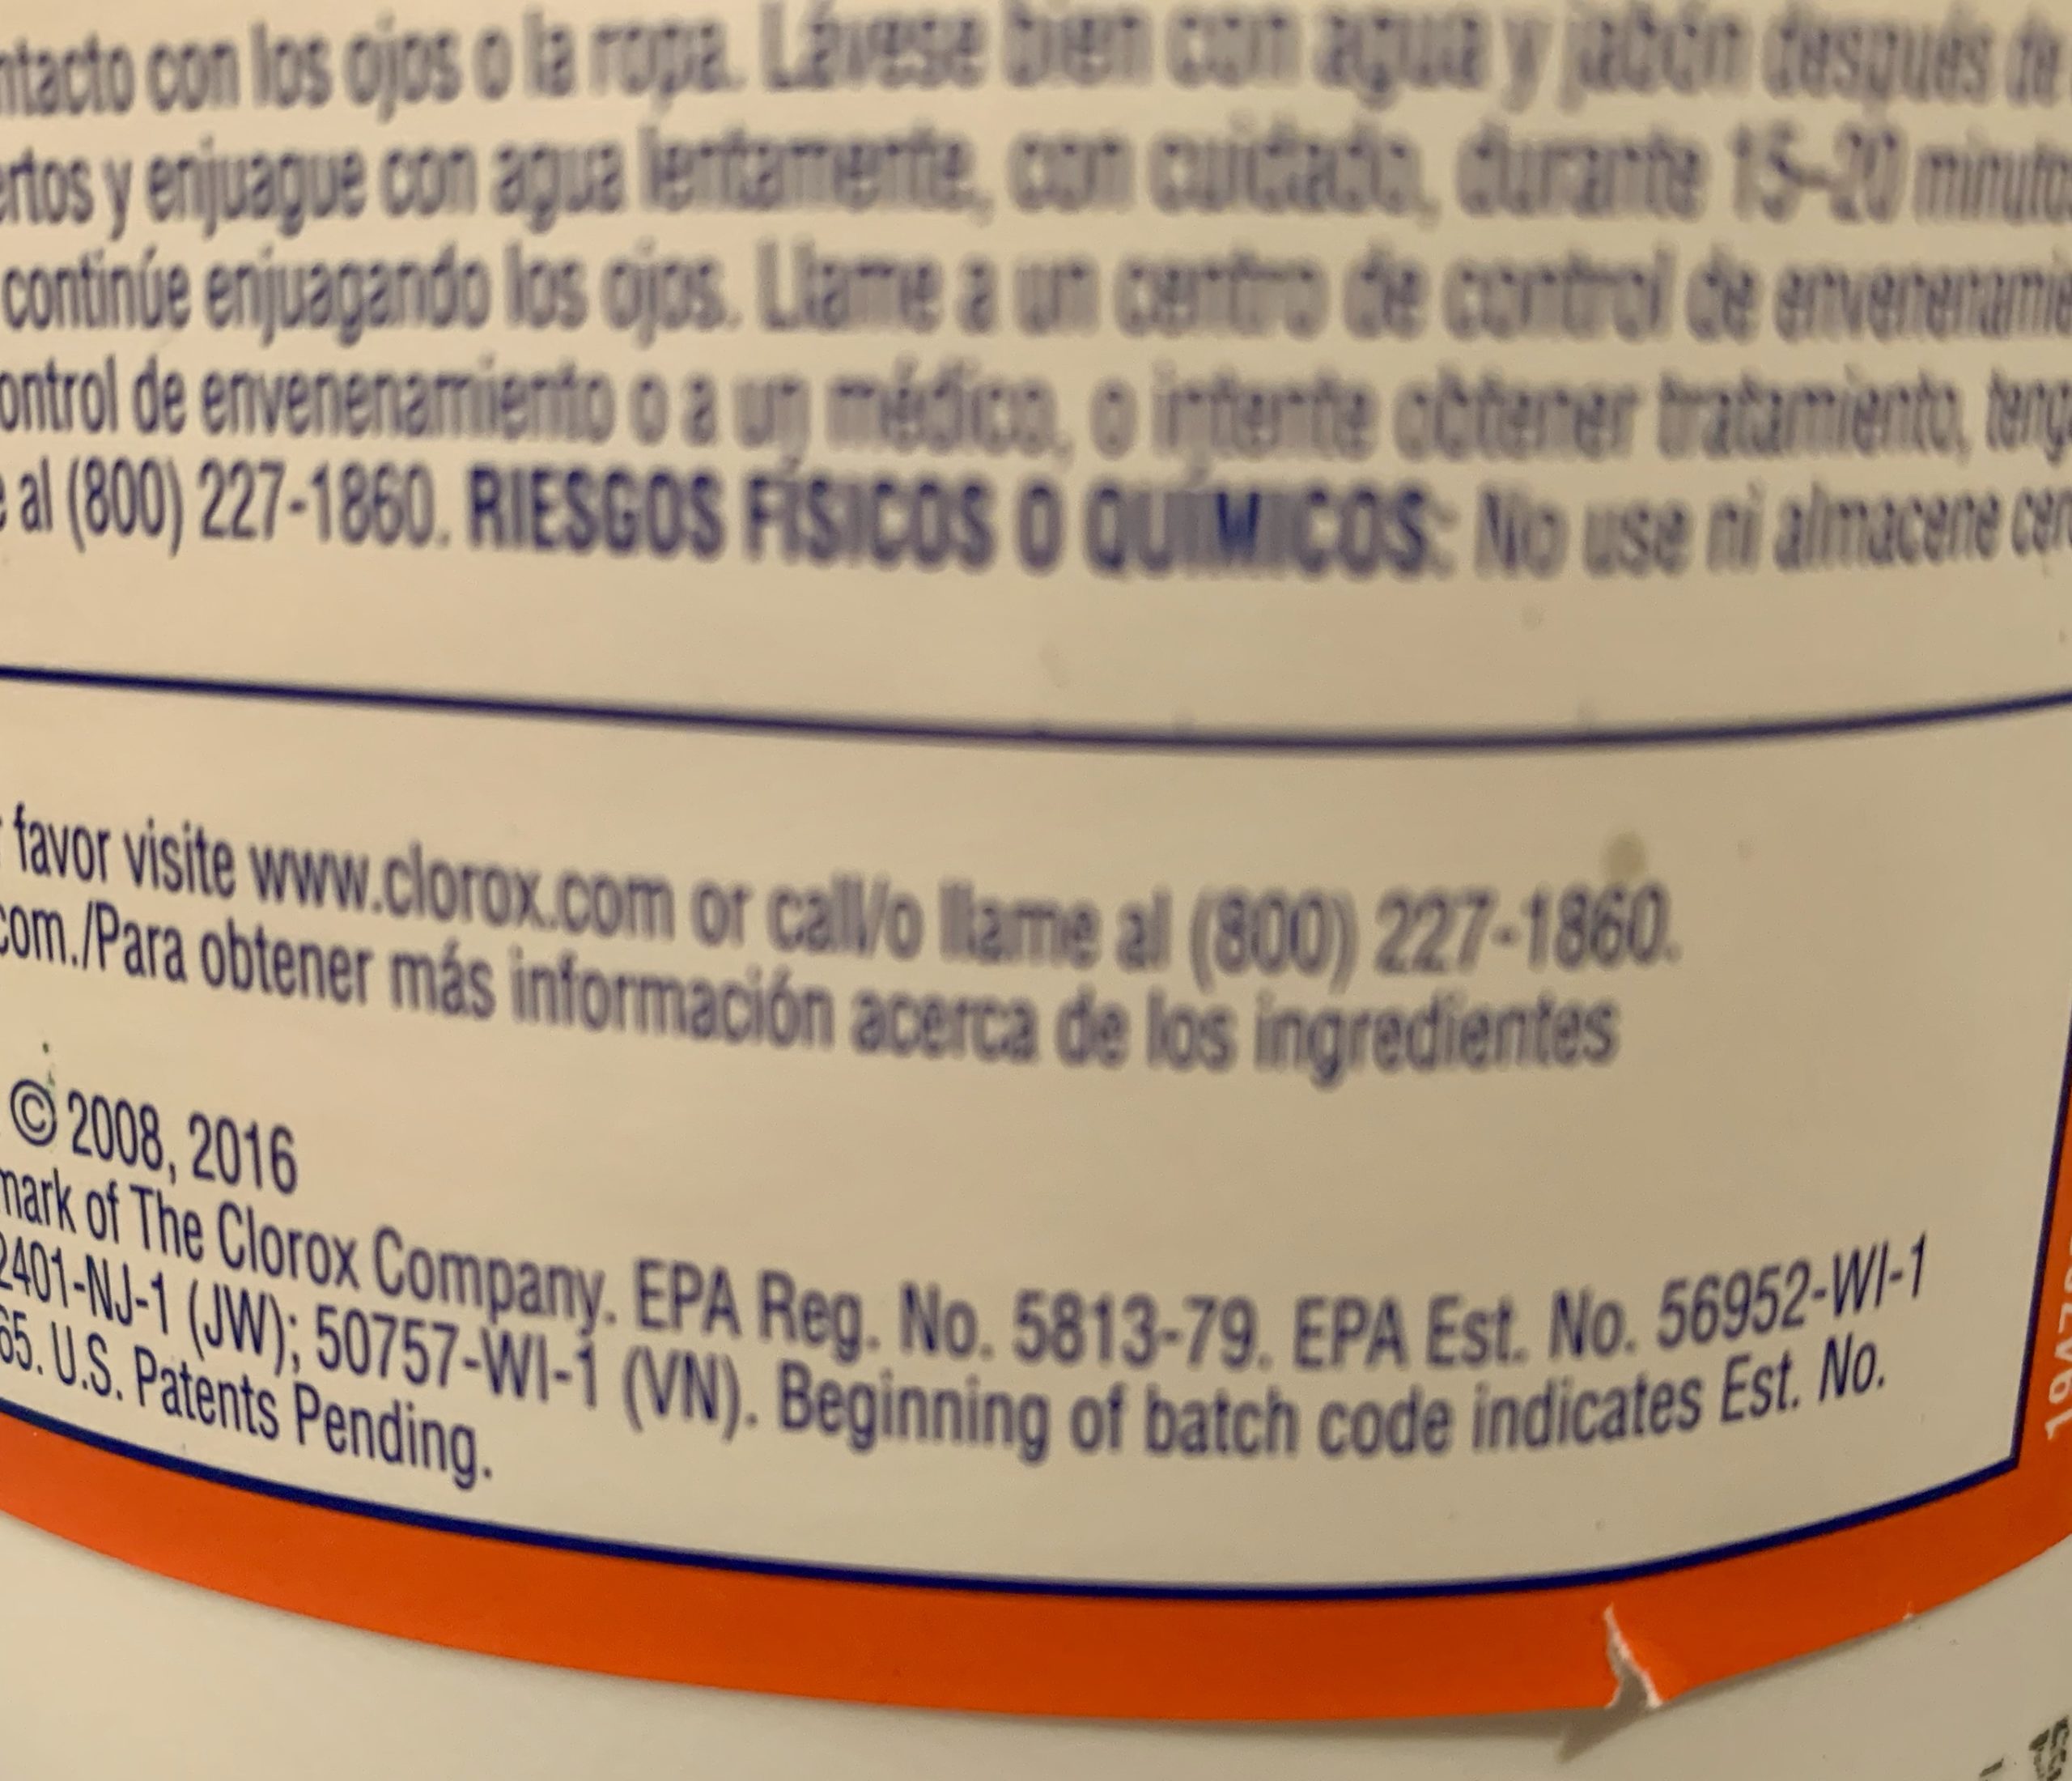 a label on a bottle